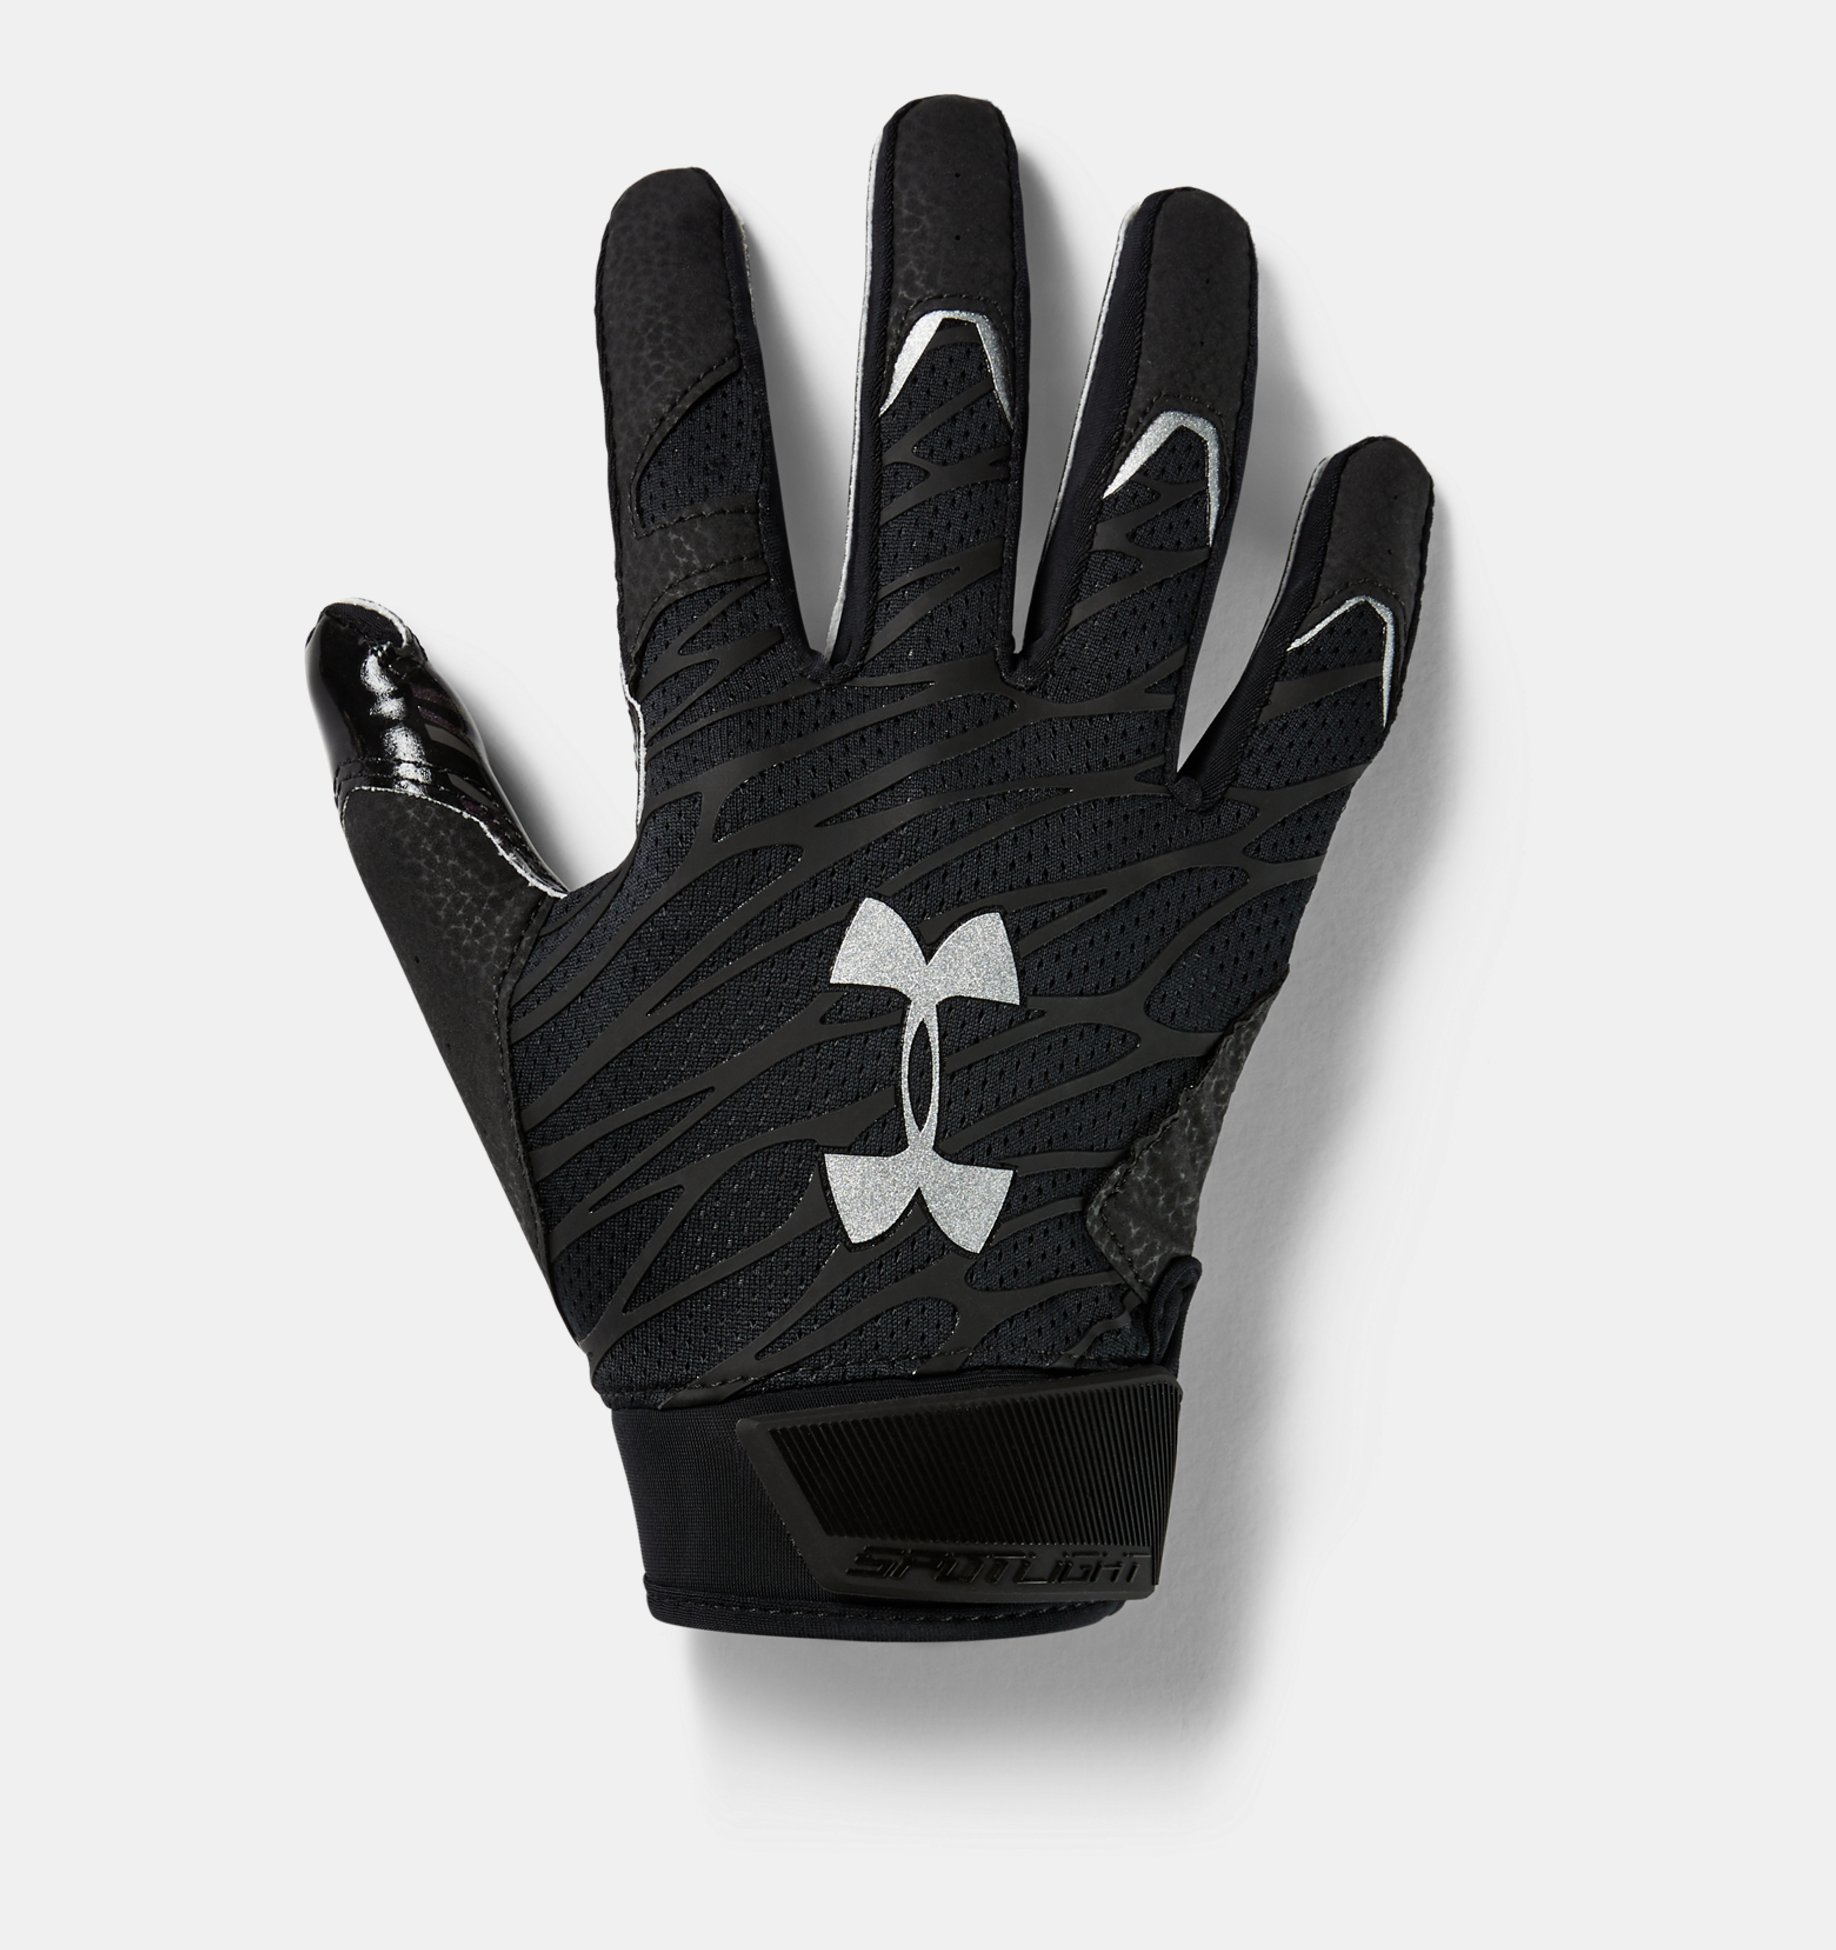 Under Armour UA Spotlight Football Gloves Black Size Xl1326218 001 for sale online 